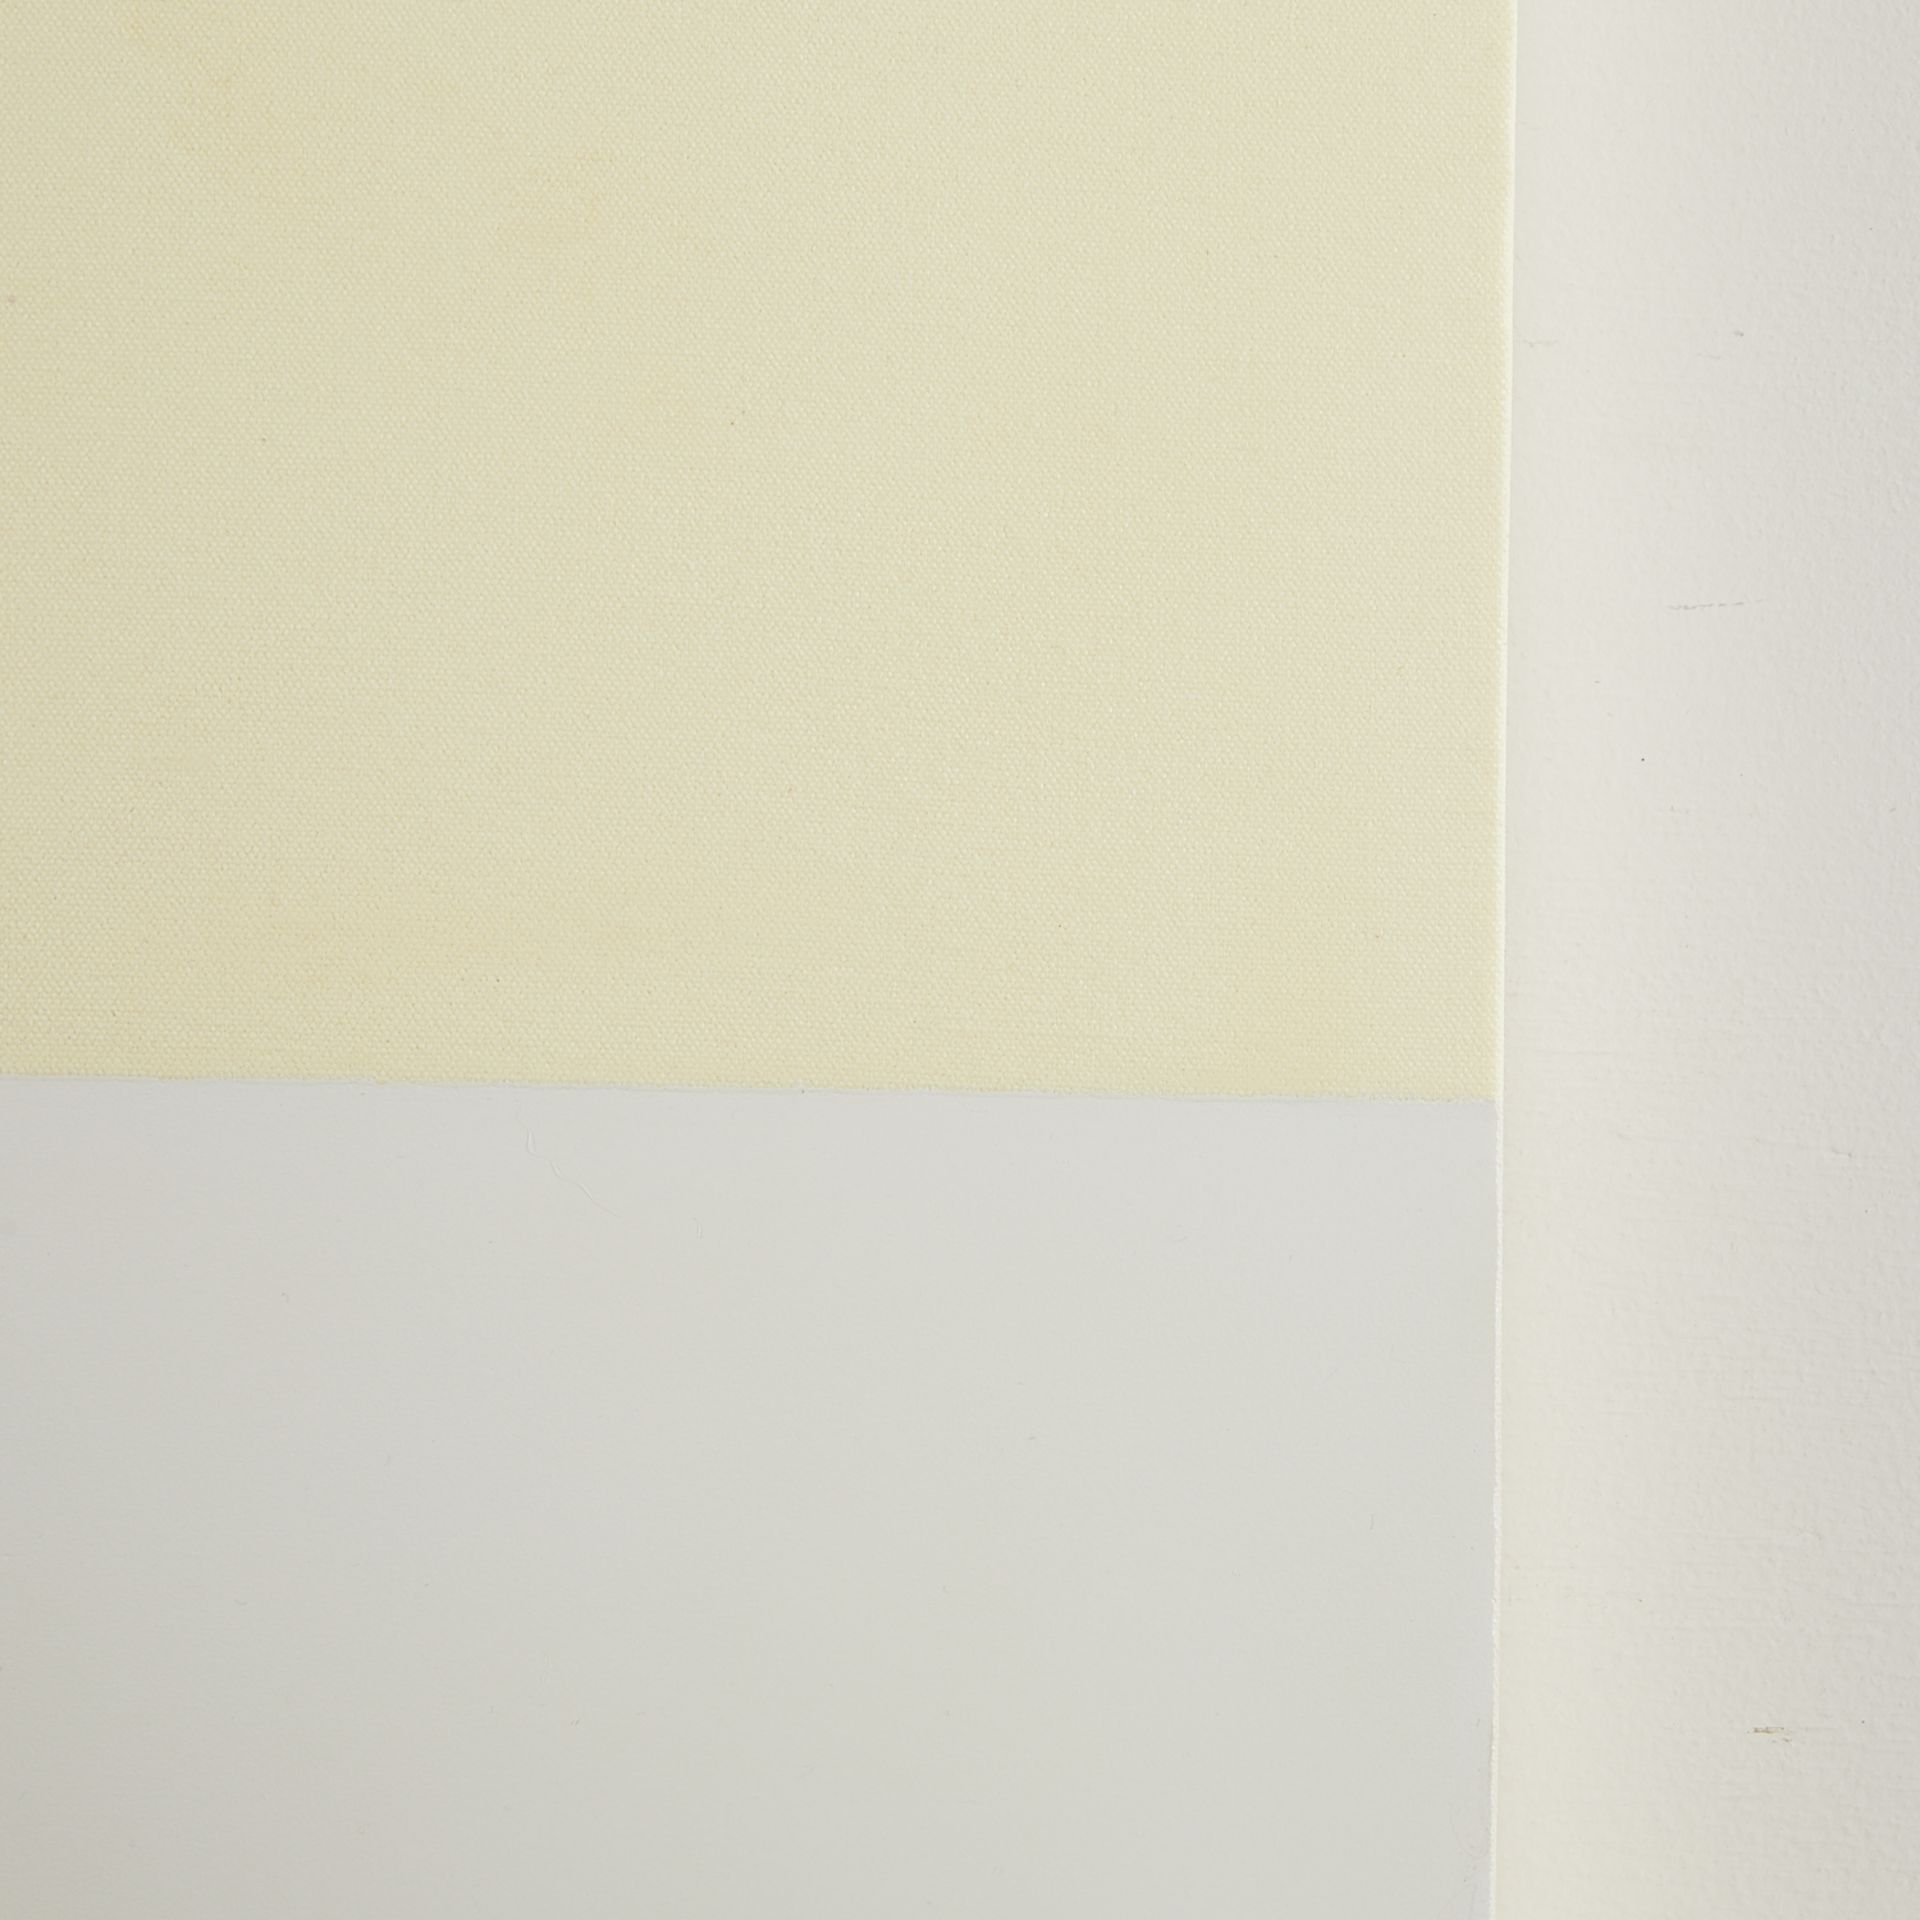 Greg Bogin Cast Plastic Convex Painting - Image 2 of 6